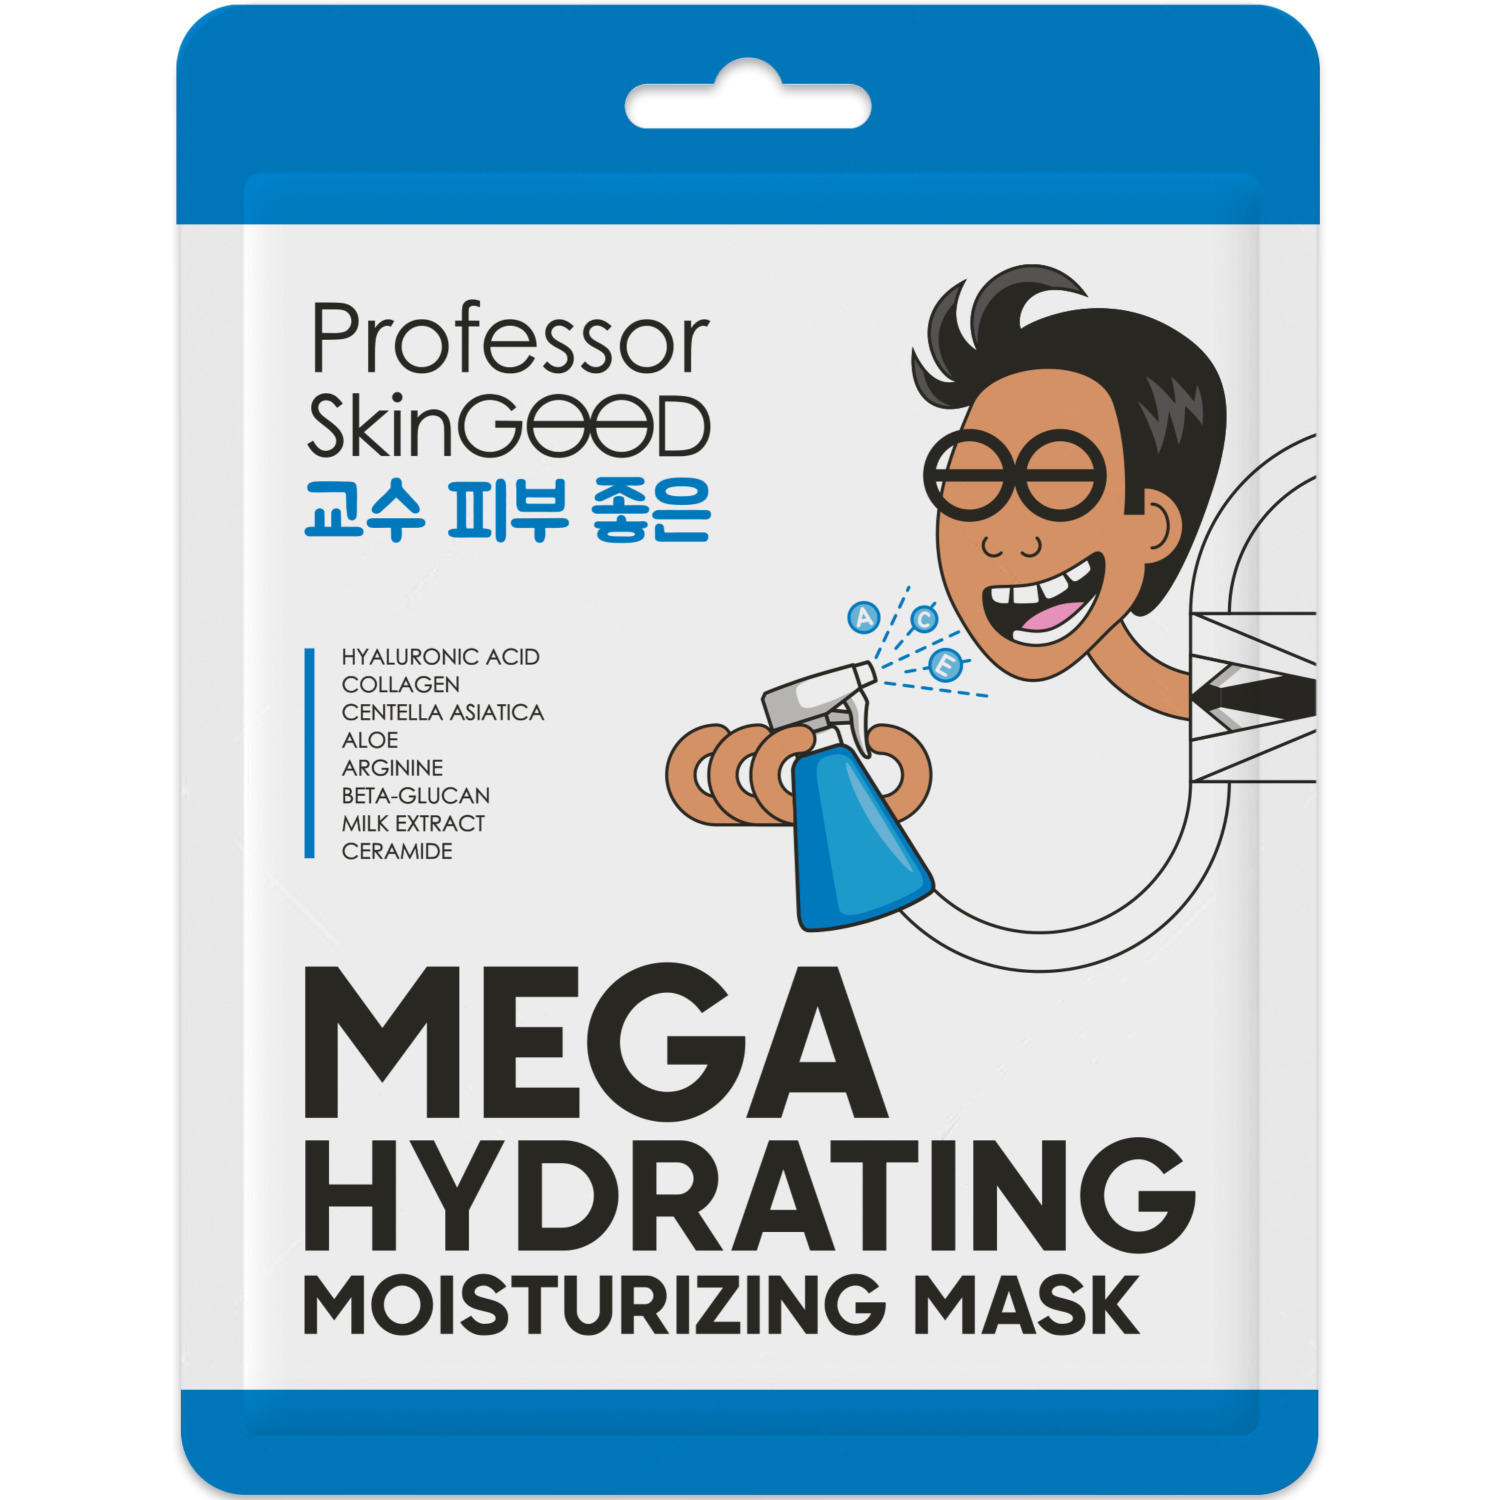 Professor SkinGOOD Увлажняющая маска Mega Hydrating Moisturizing Mask, 25 г (Professor SkinGOOD, Маски)